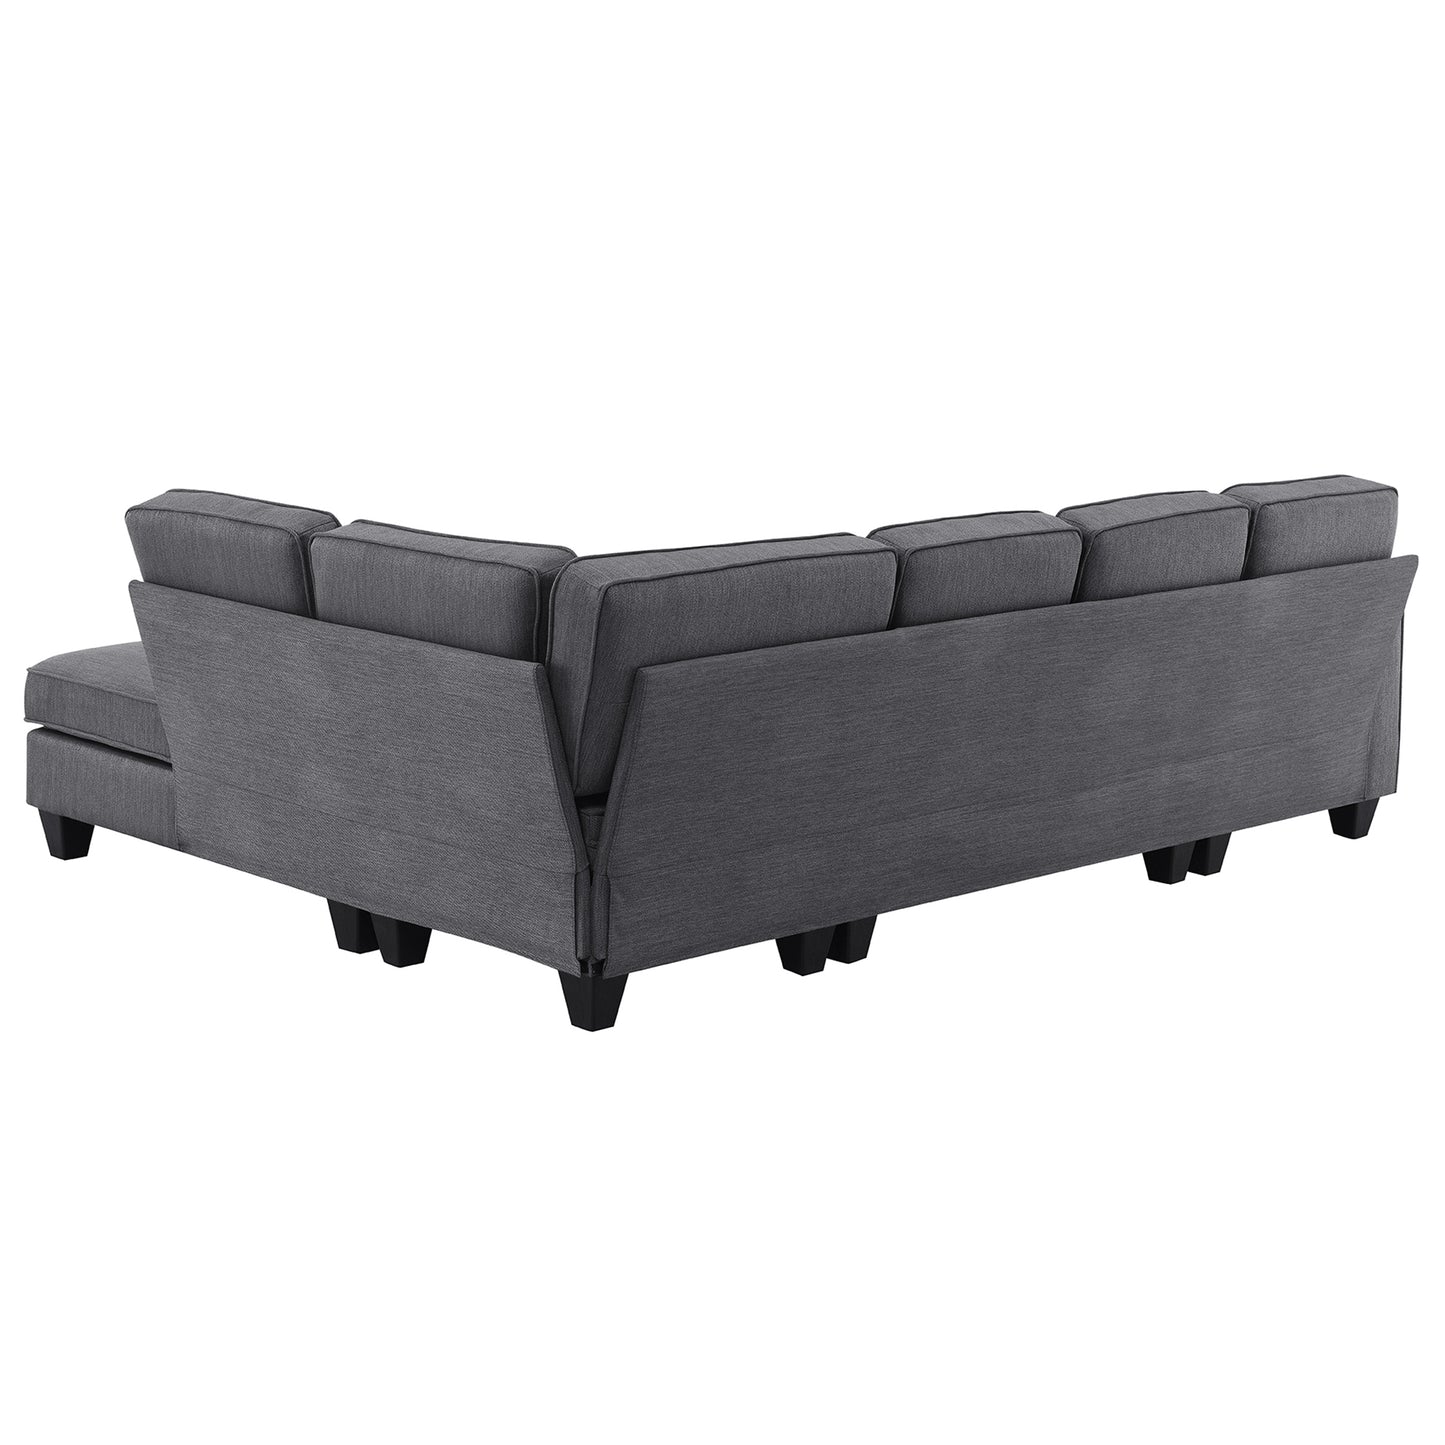 Presto L-shaped Sectional Sofa - Grey